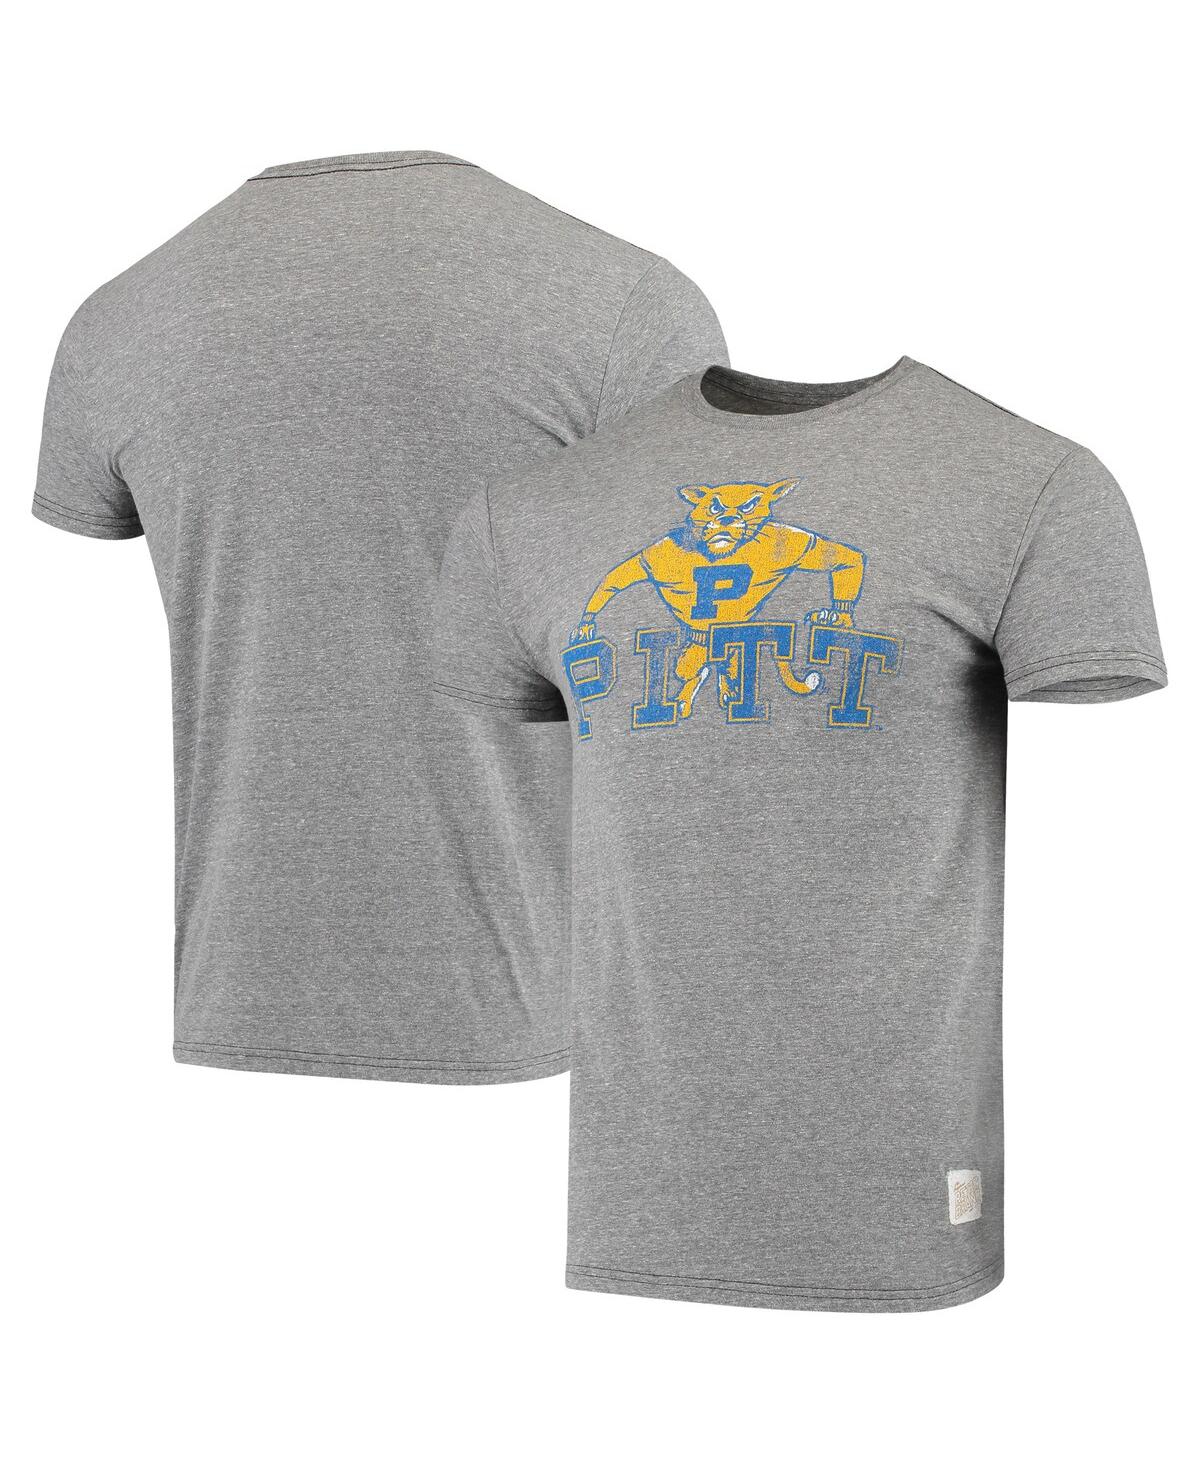 Men's Original Retro Brand Heathered Gray Pitt Panthers Team Vintage-Like Tri-Blend T-shirt - Heathered Gray